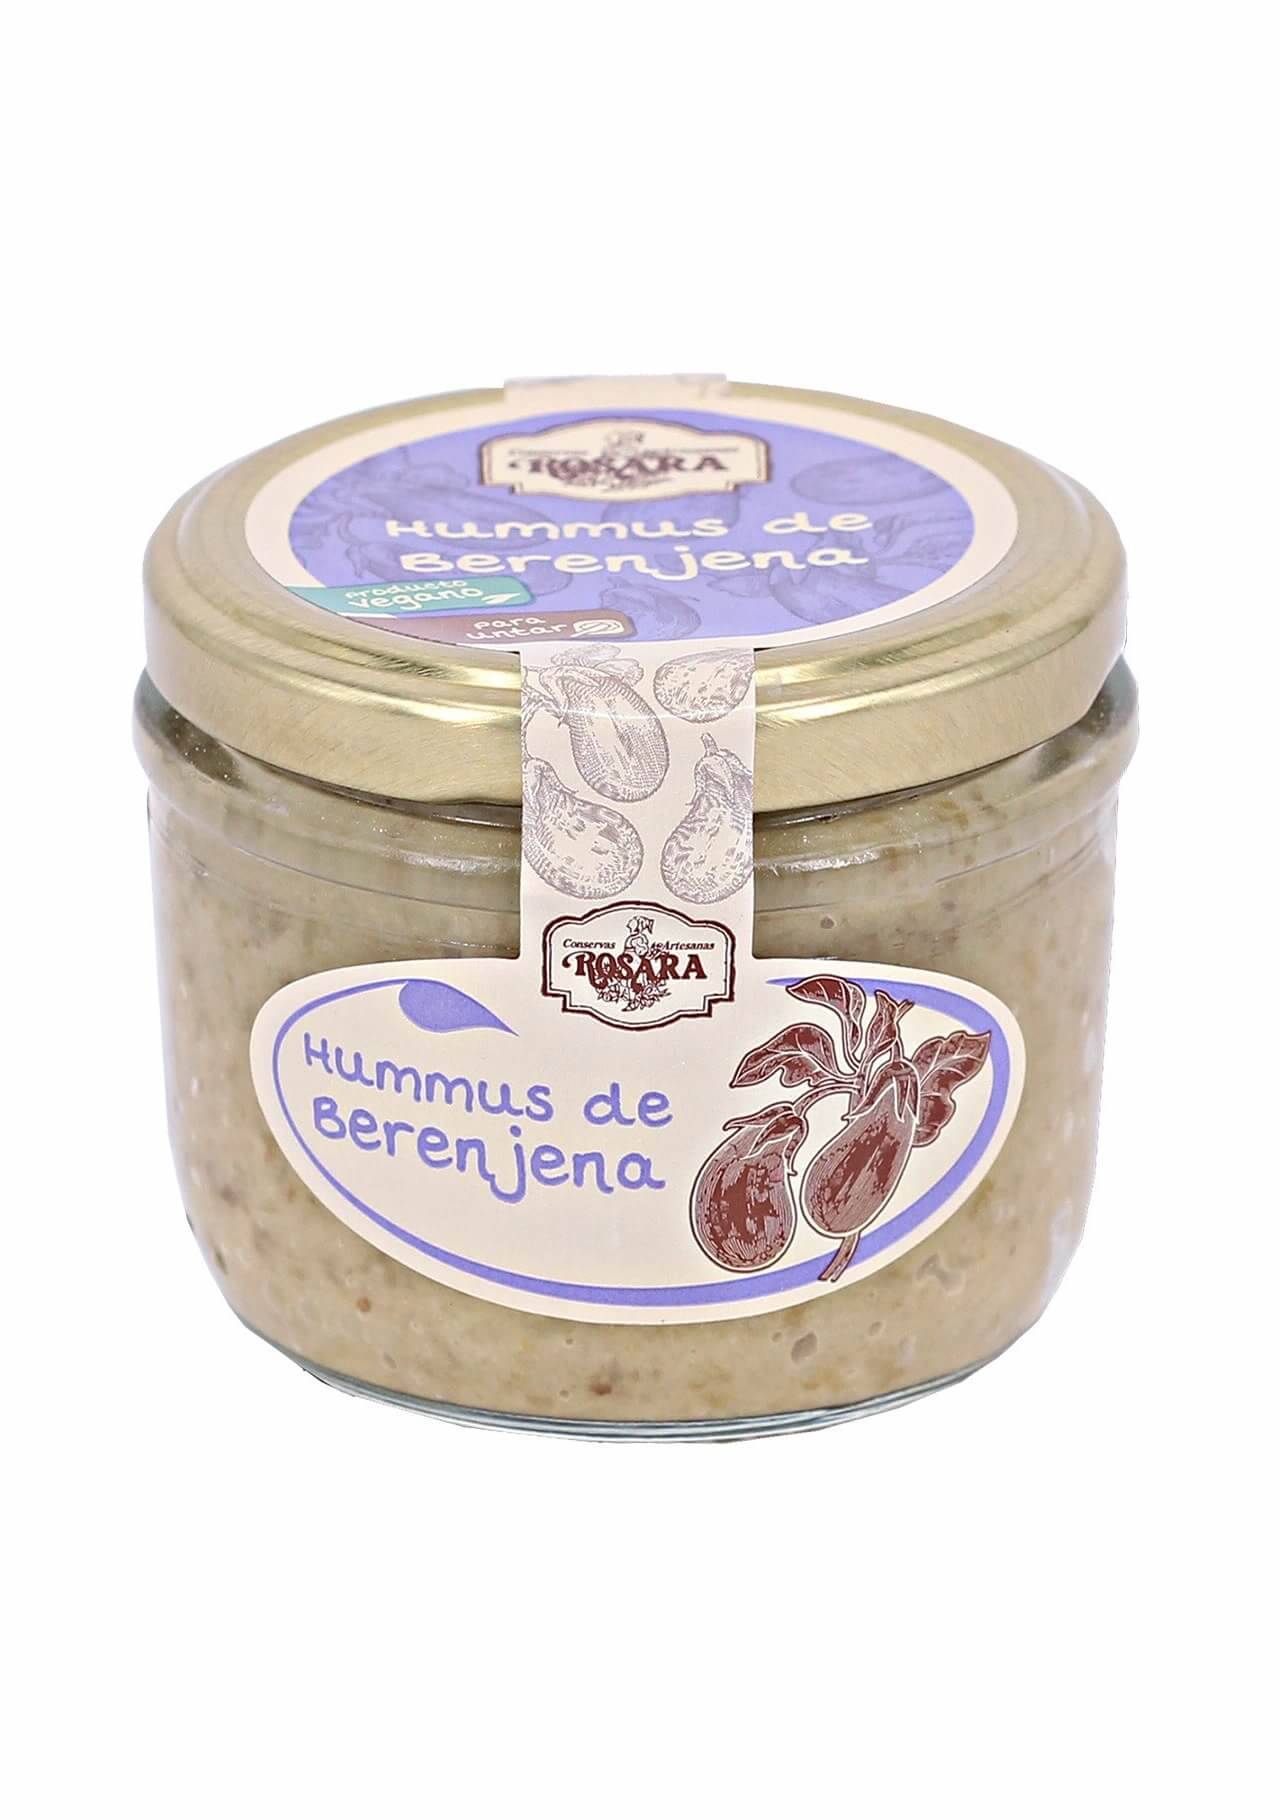 Hummus mercadona hummus de berenjena Rosara